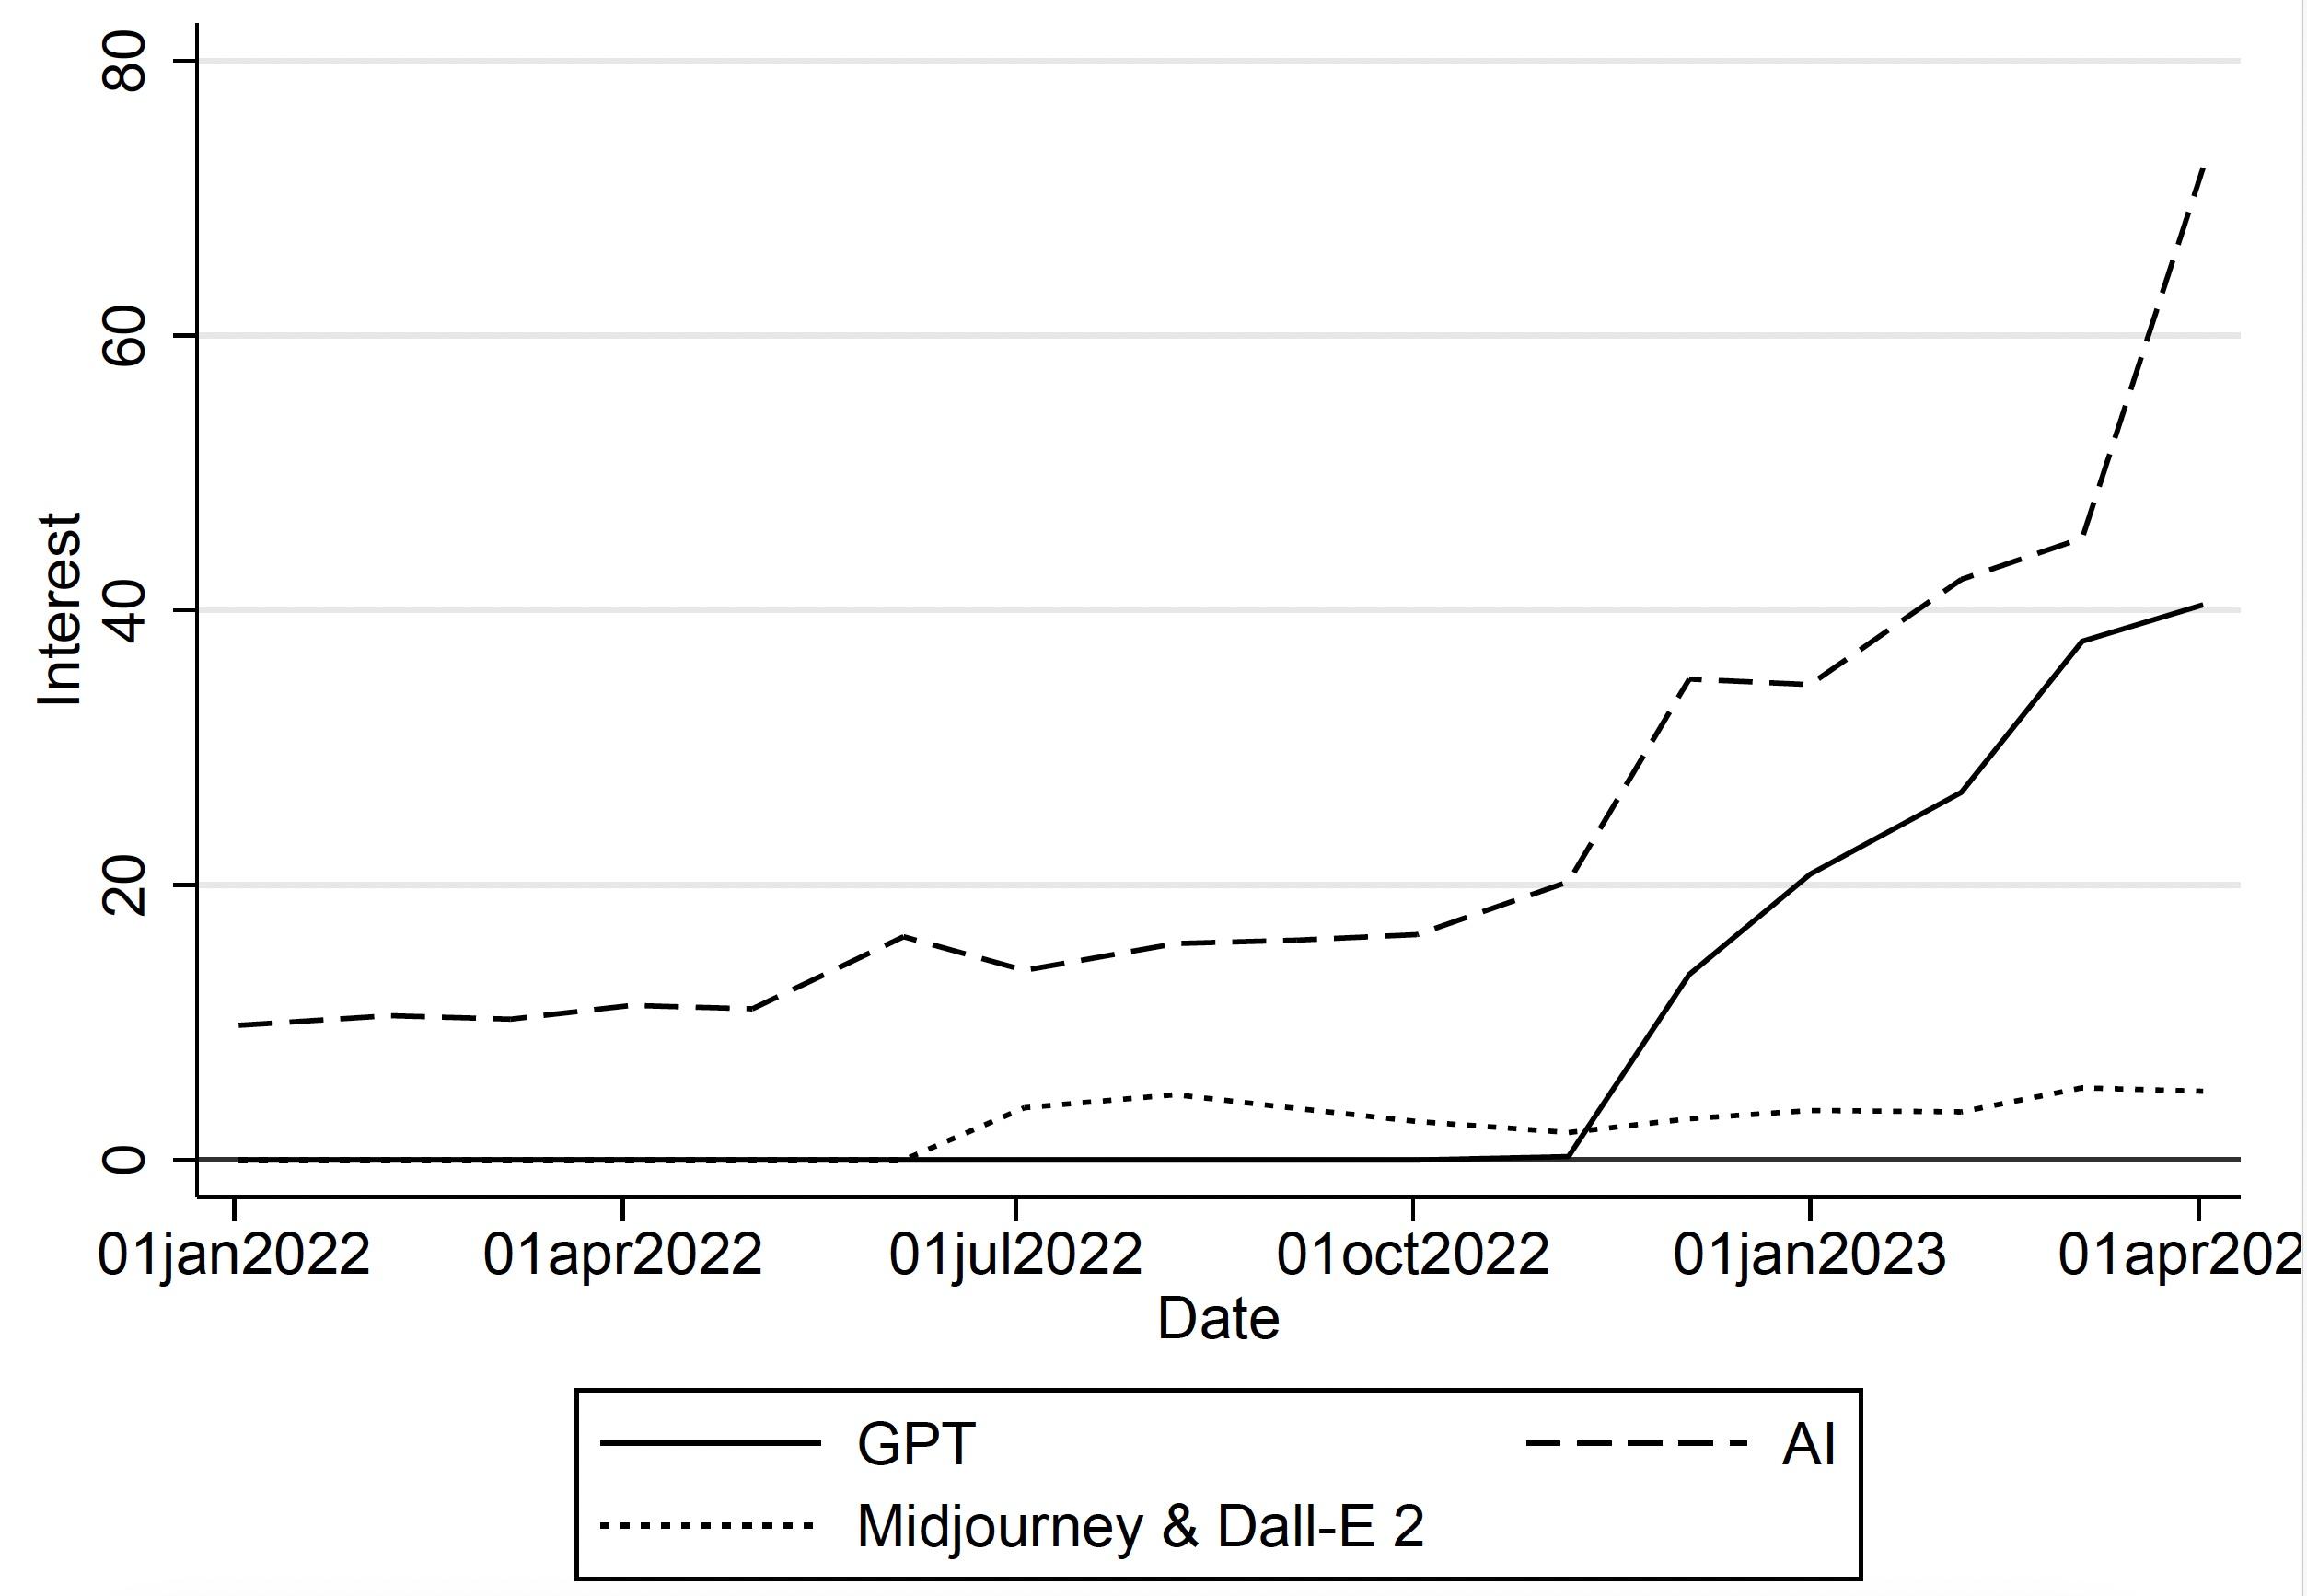 Figure 1 Descriptive evidence on interest in ChatGPT over time